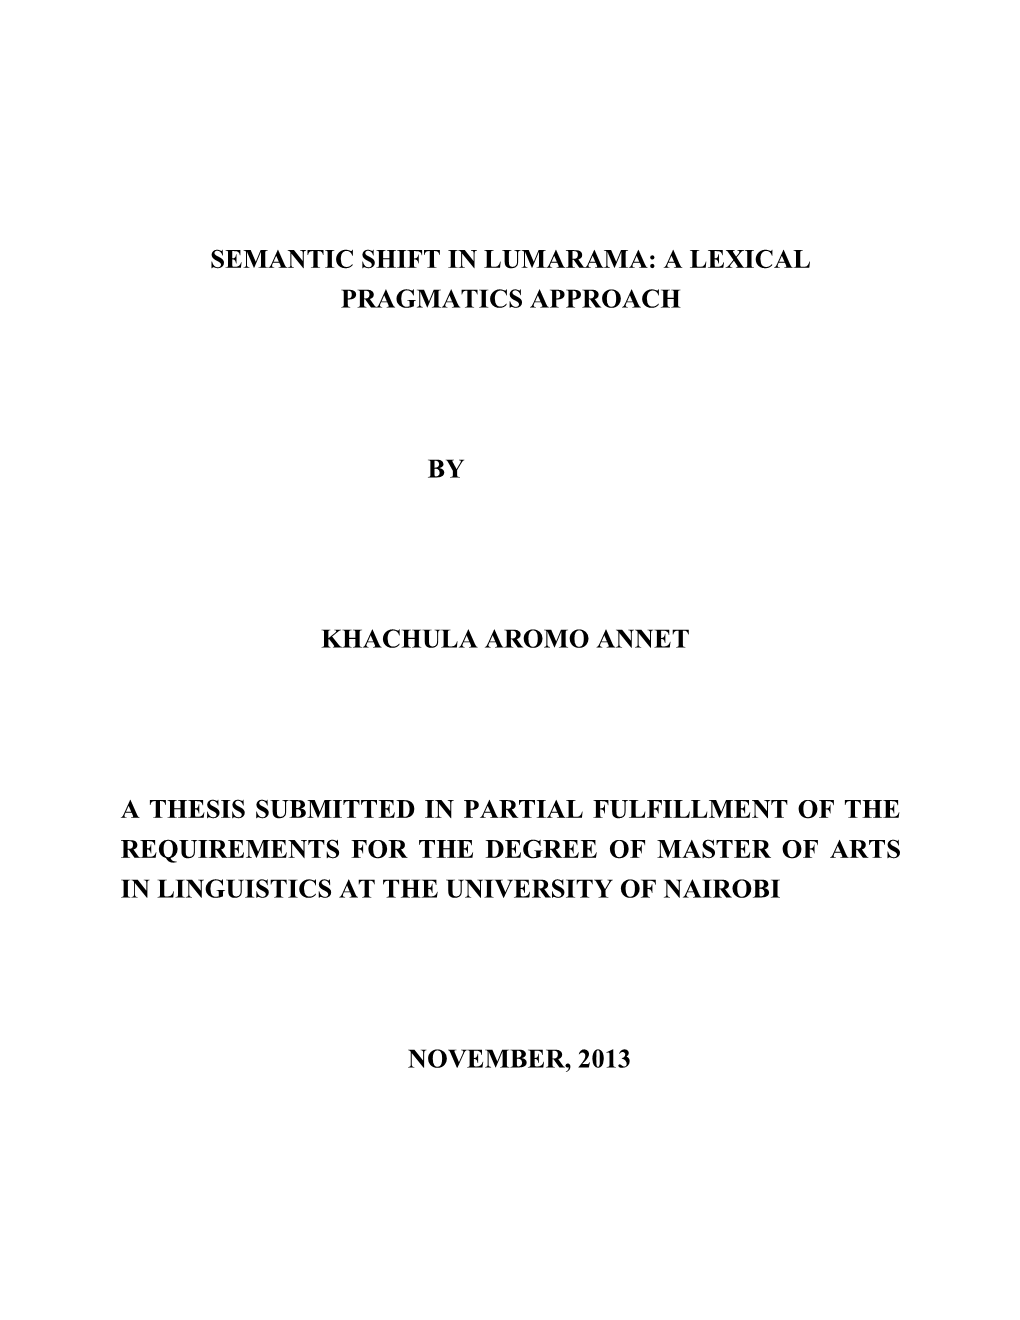 Semantic Shift in Lumarama: a Lexical Pragmatics Approach